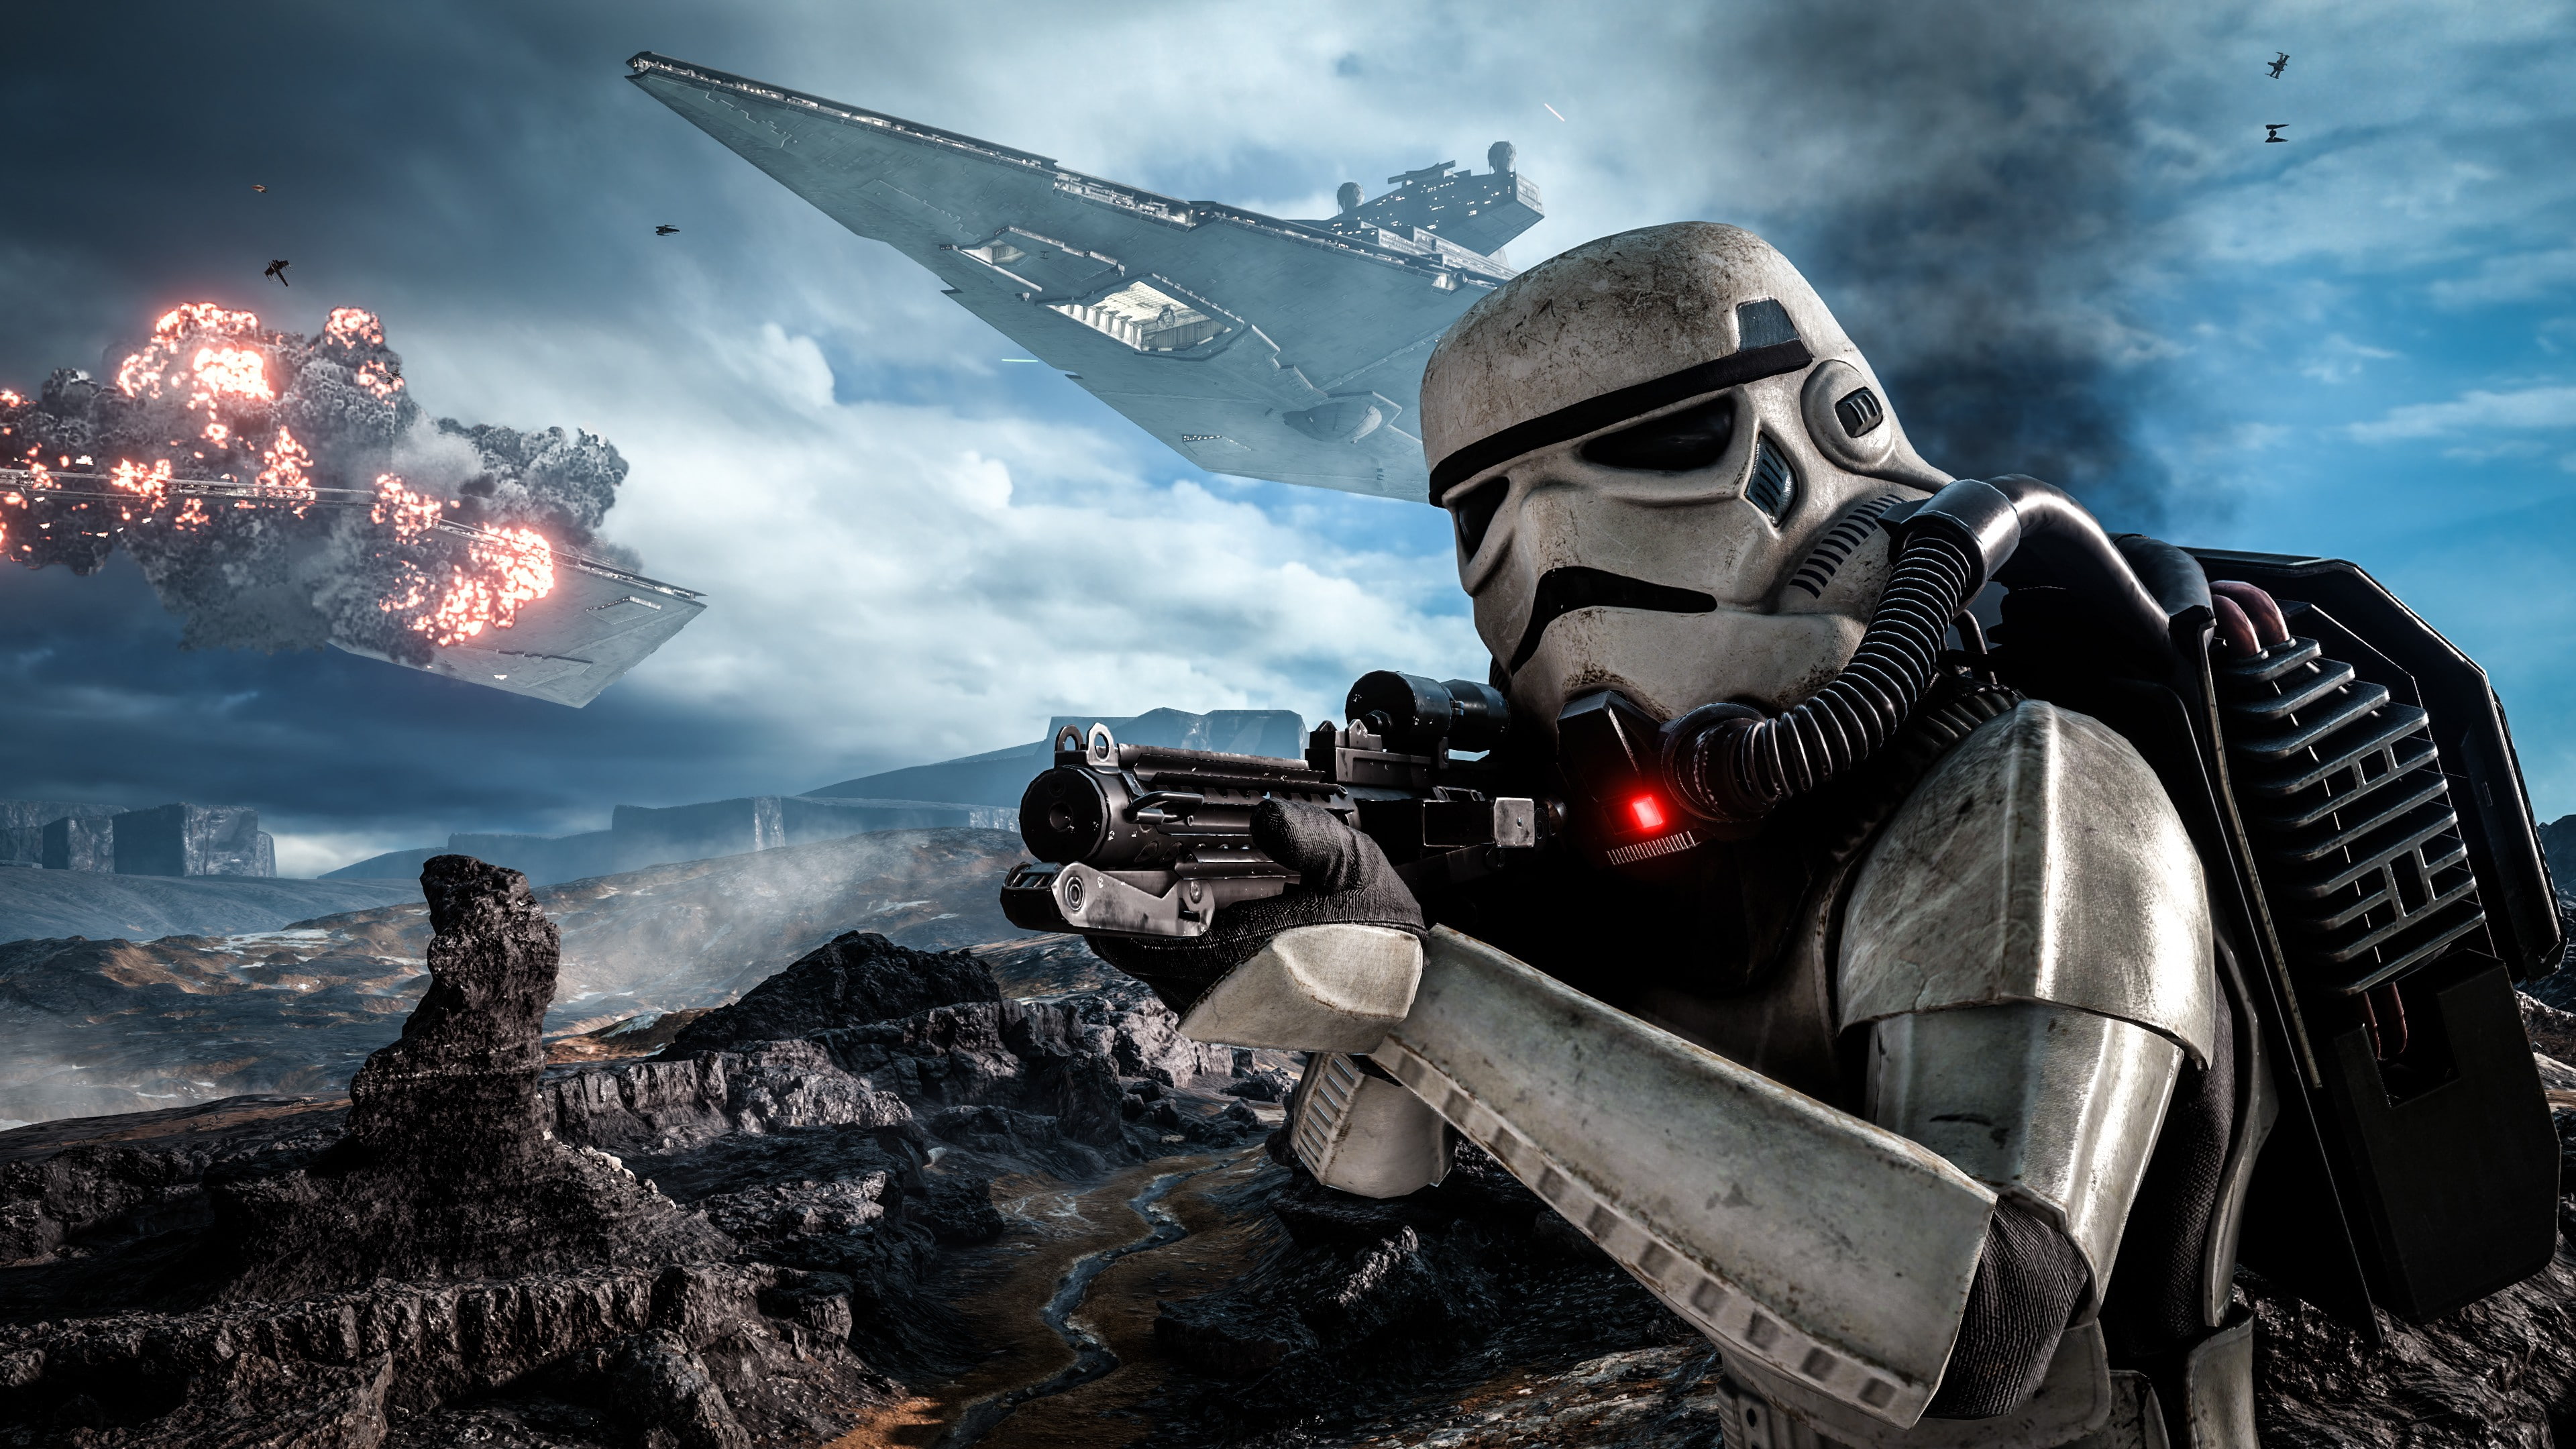 Star Wars Stormtrooper digital wallpaper, Star Wars Battlefront